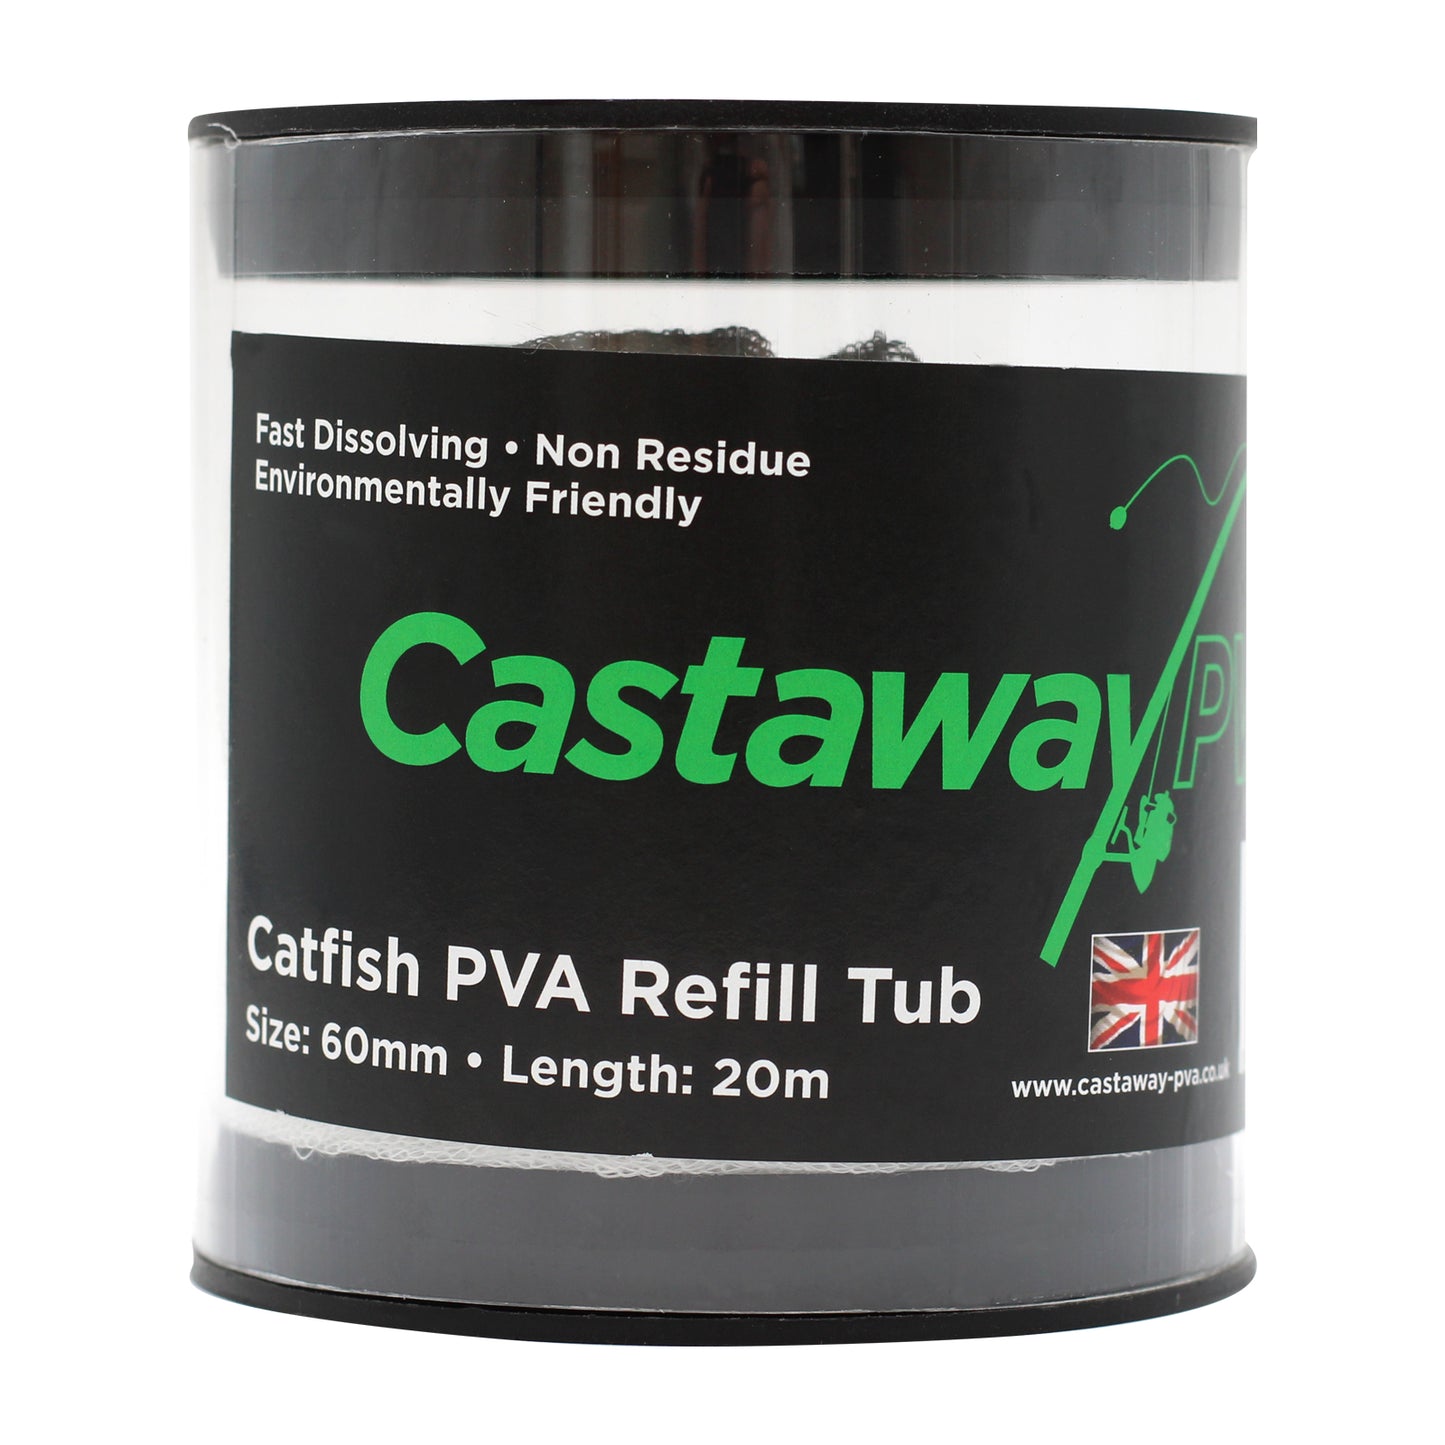 Catfish PVA Refill Tub 60mm 20m